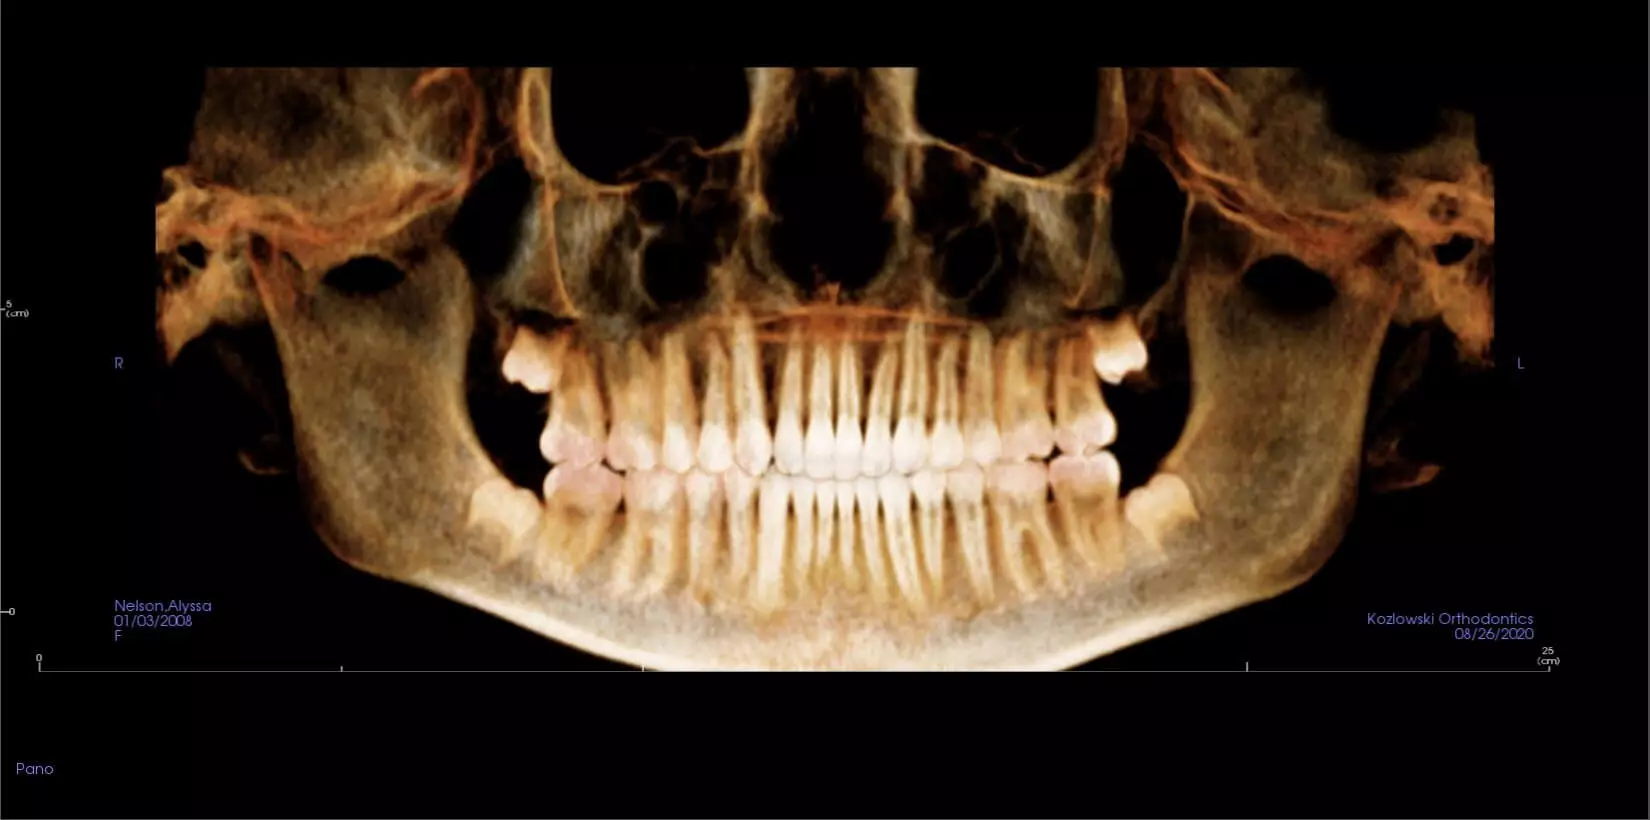 x-ray of teeth after pan